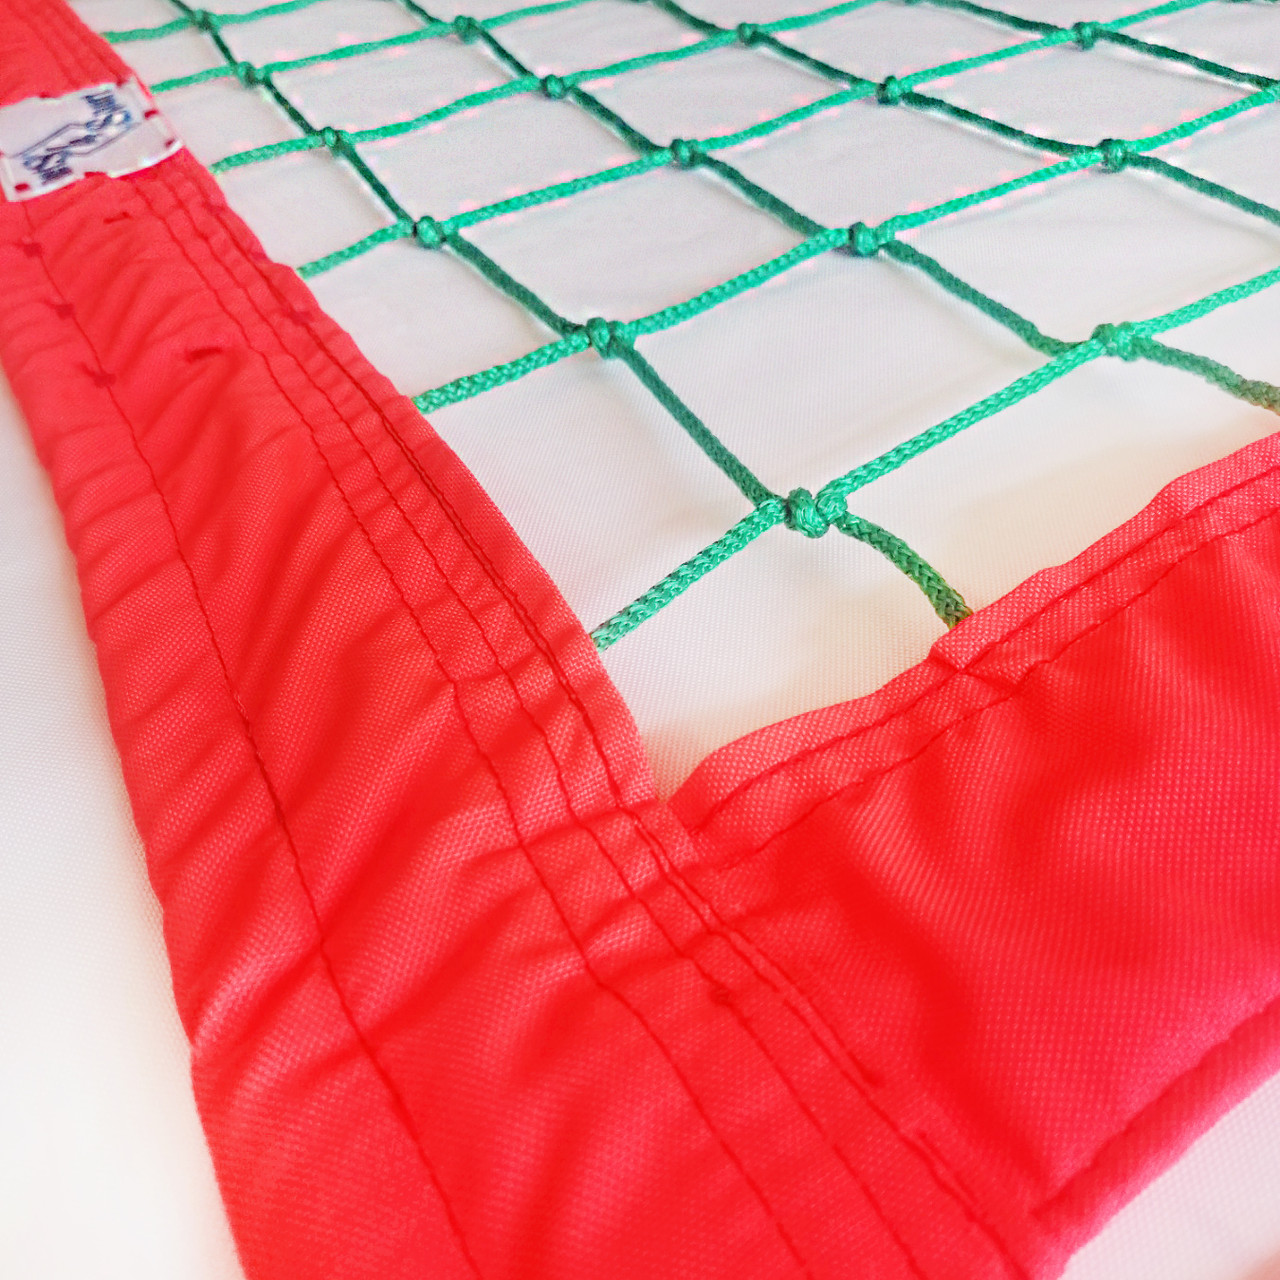 Волейбольна сітка для пляжного волейболу «ЕЛІТ» зелено-помаранчева